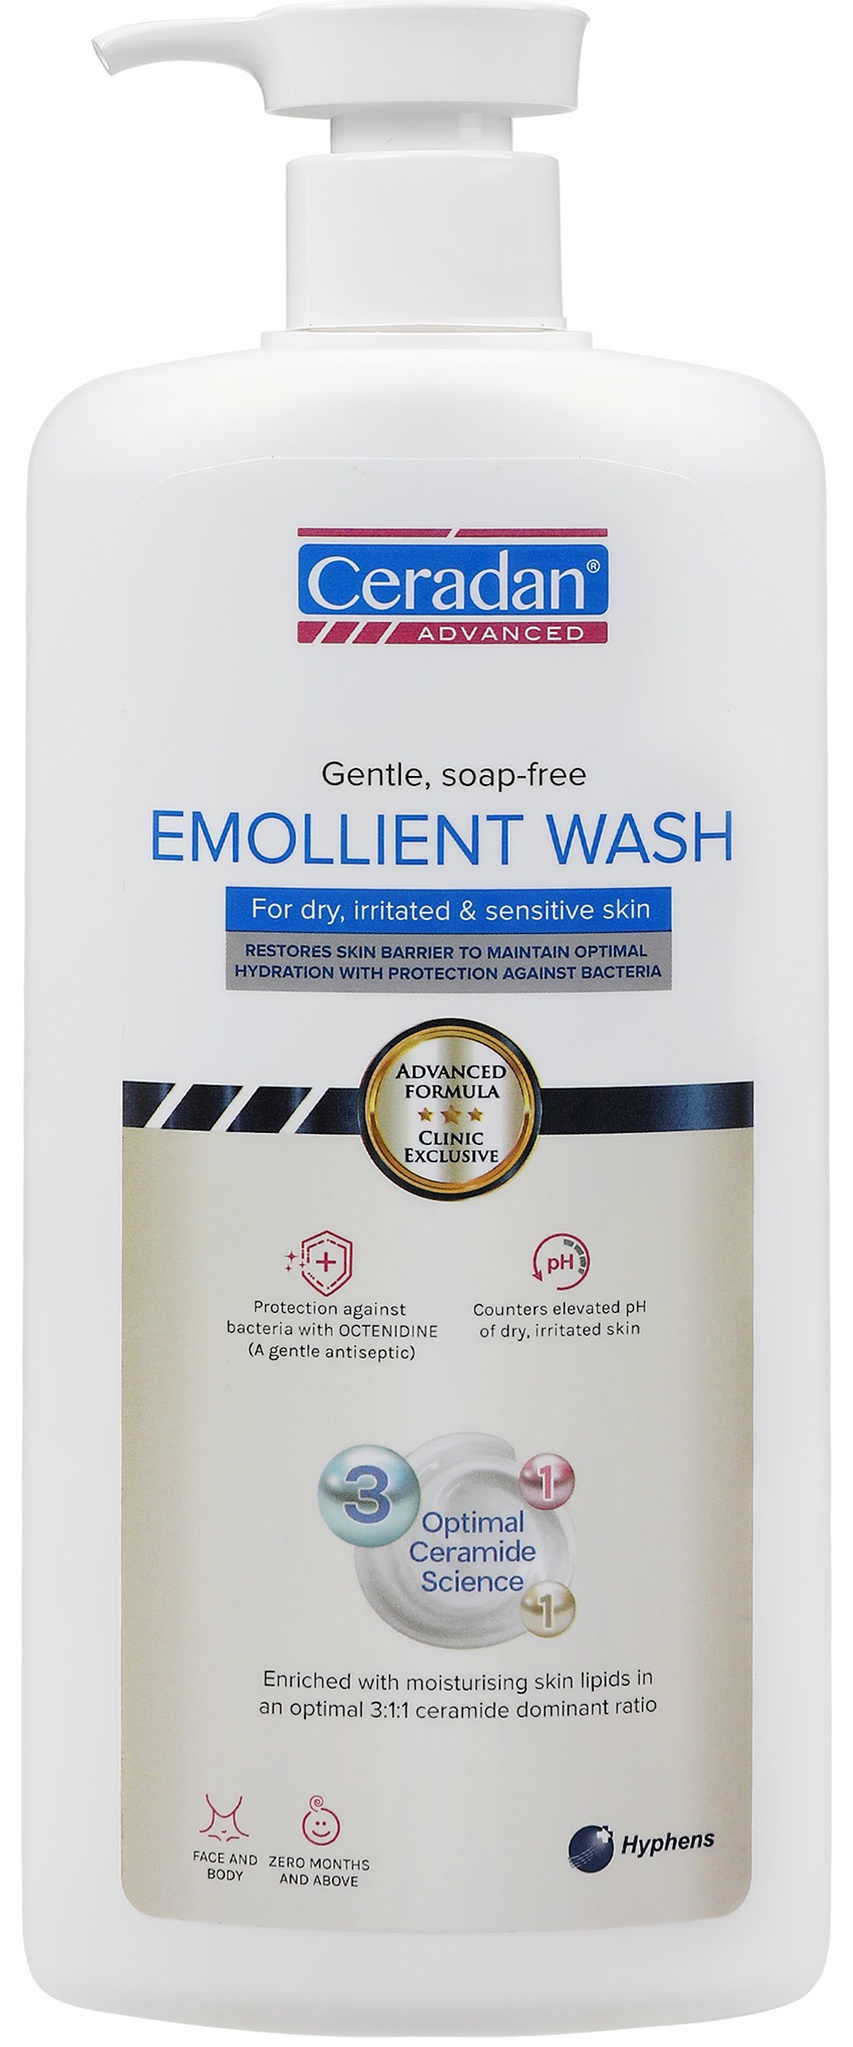 Ceradan Advanced Emollient Wash